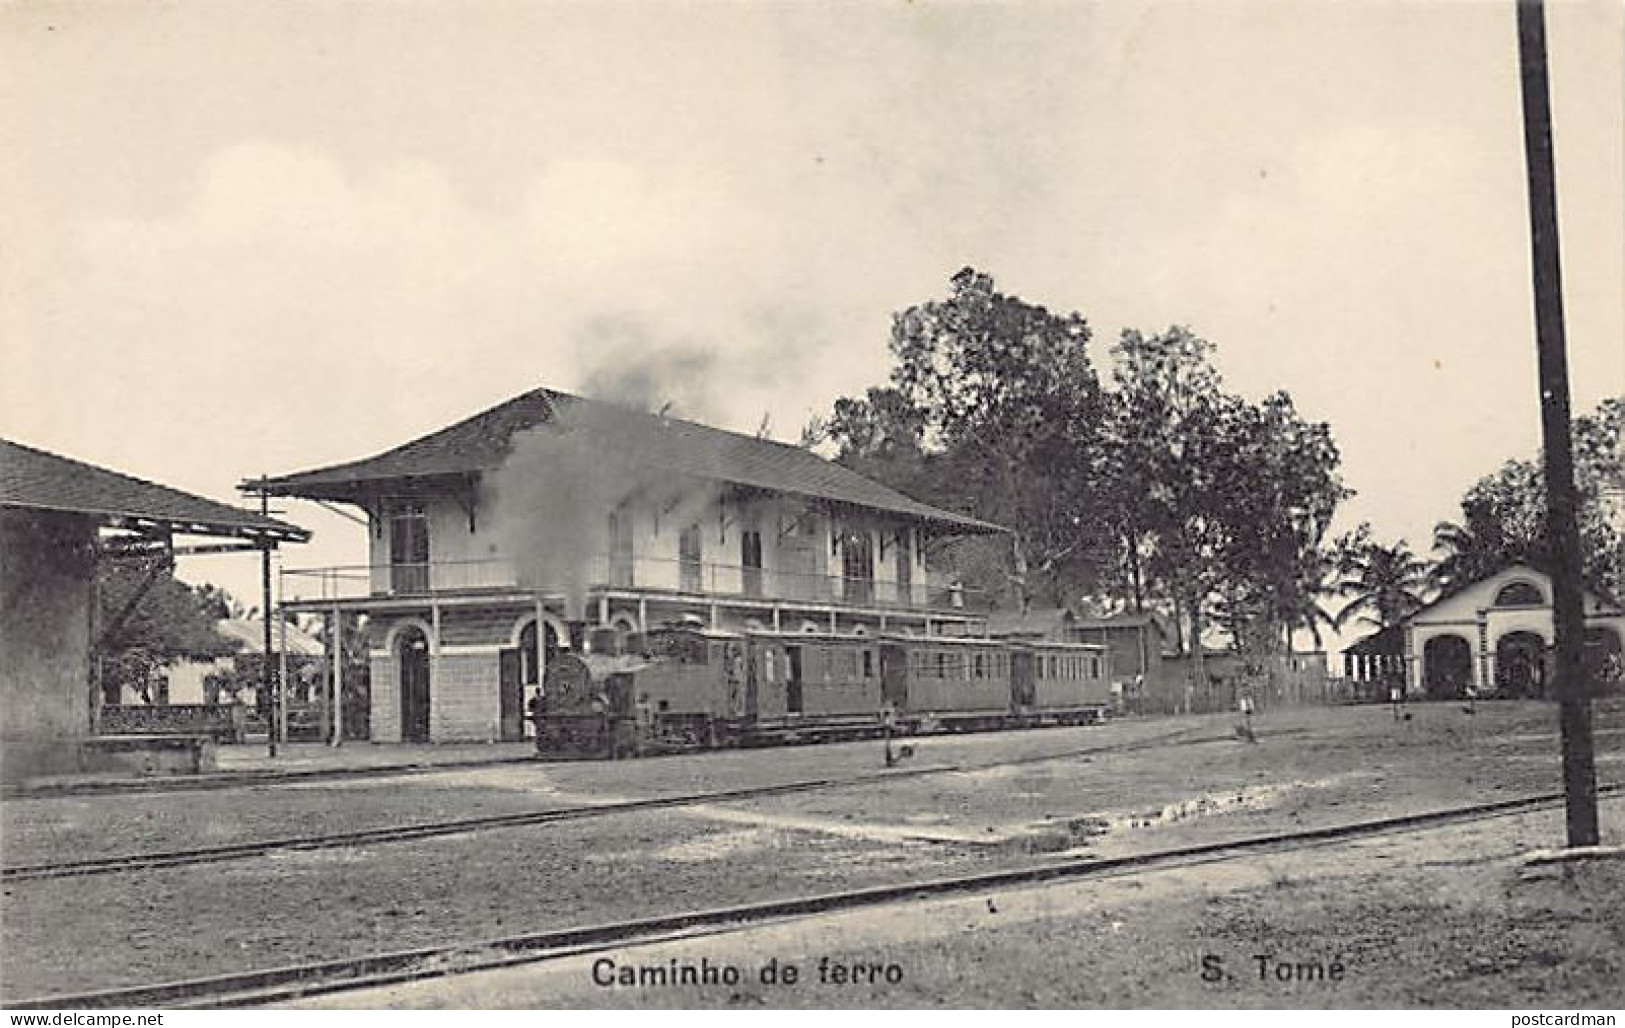 SAO TOME - The Railway Railroad Station - Publ. Governo. - Sao Tome Et Principe